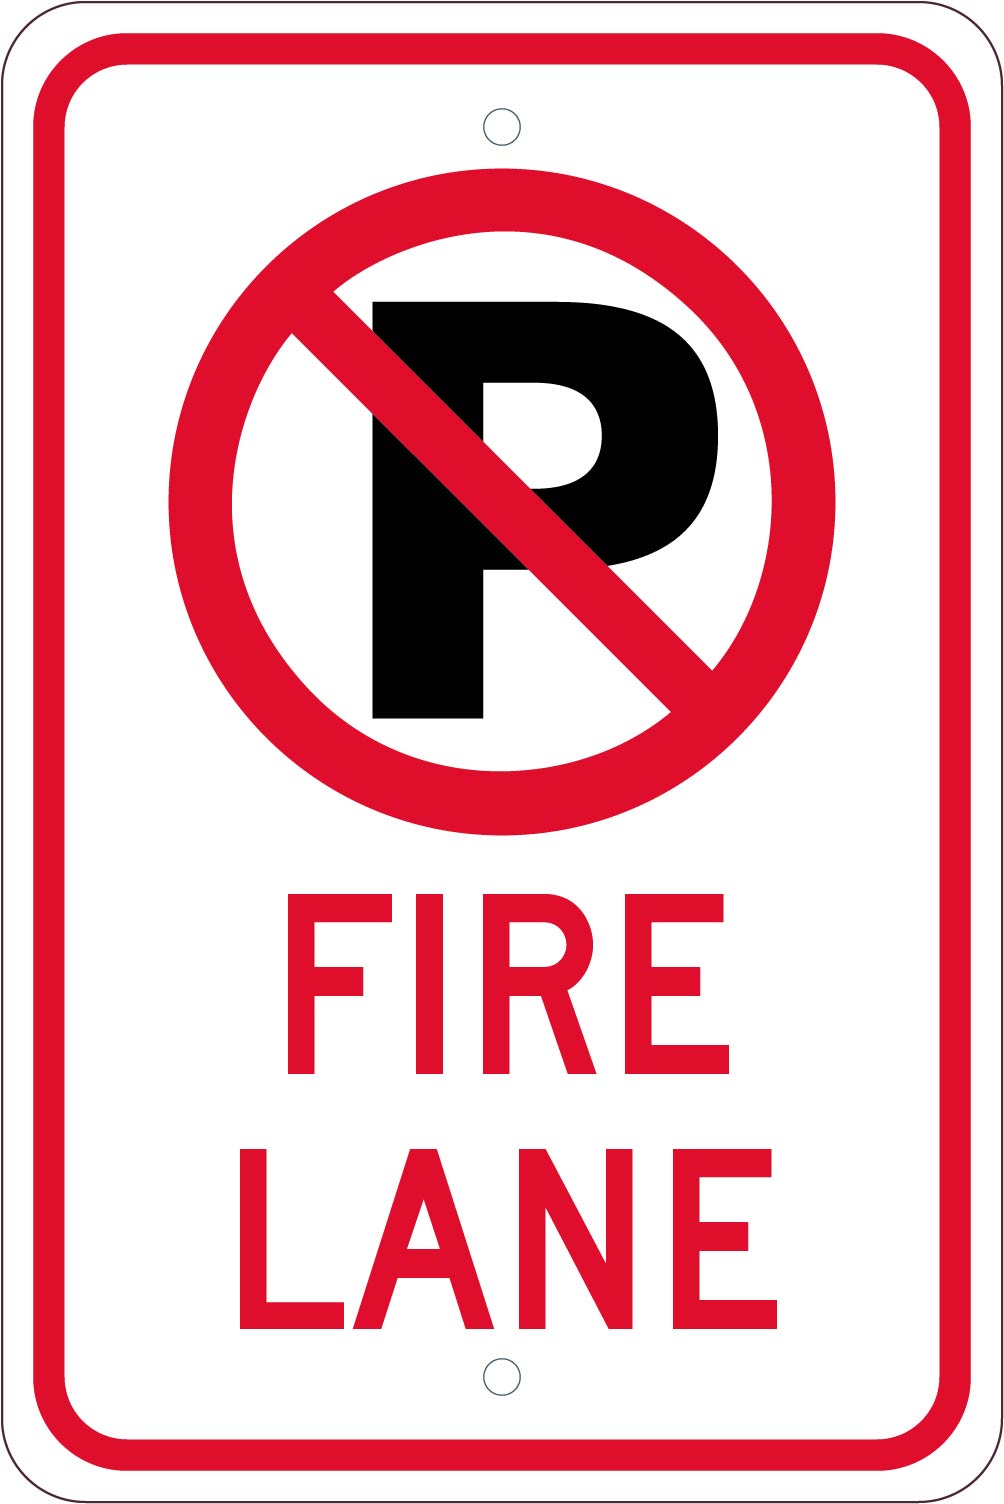 (No Parking Graphic)Fire Lane, 18X12, .080 Hip Ref Alum Sign - TM0101K-eSafety Supplies, Inc